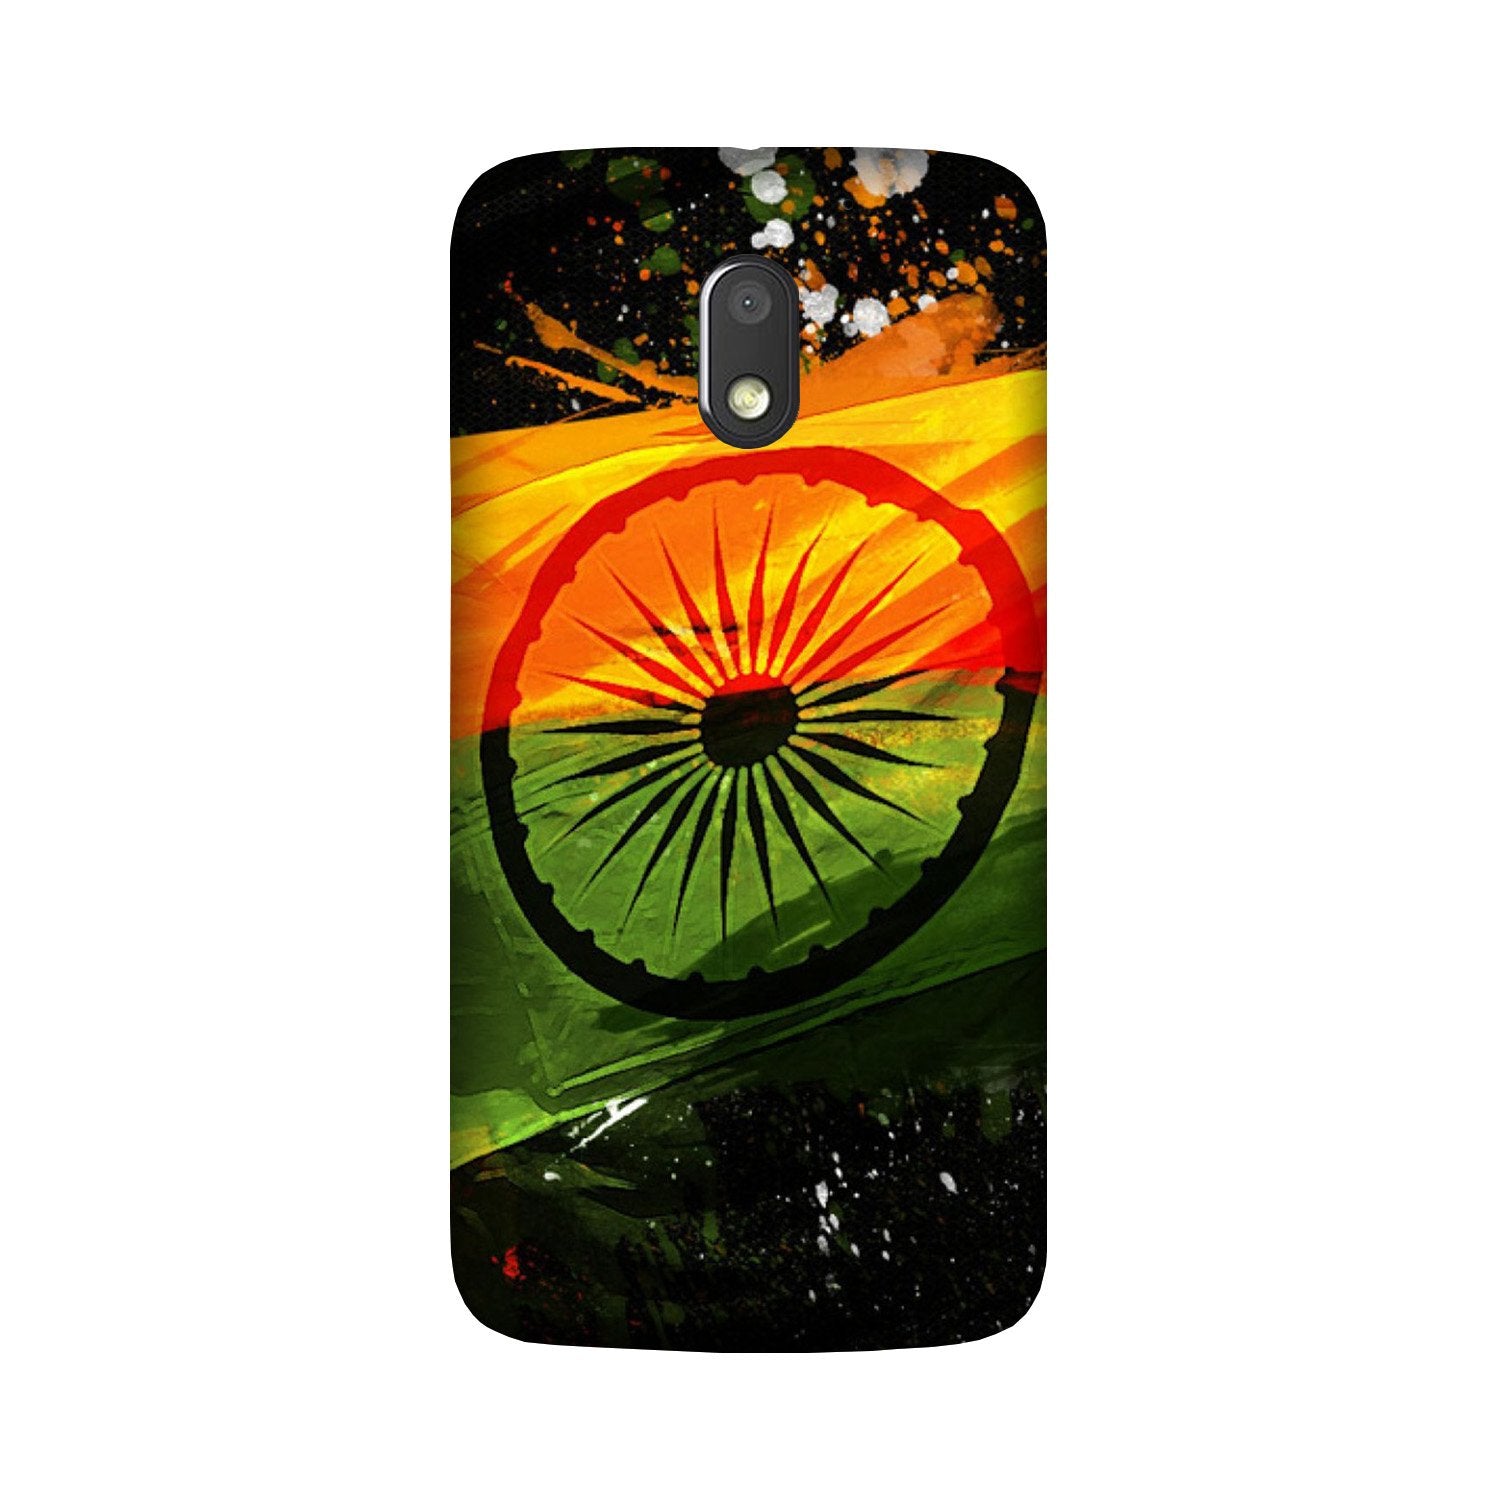 Indian Flag Case for Moto G4 Play(Design - 137)